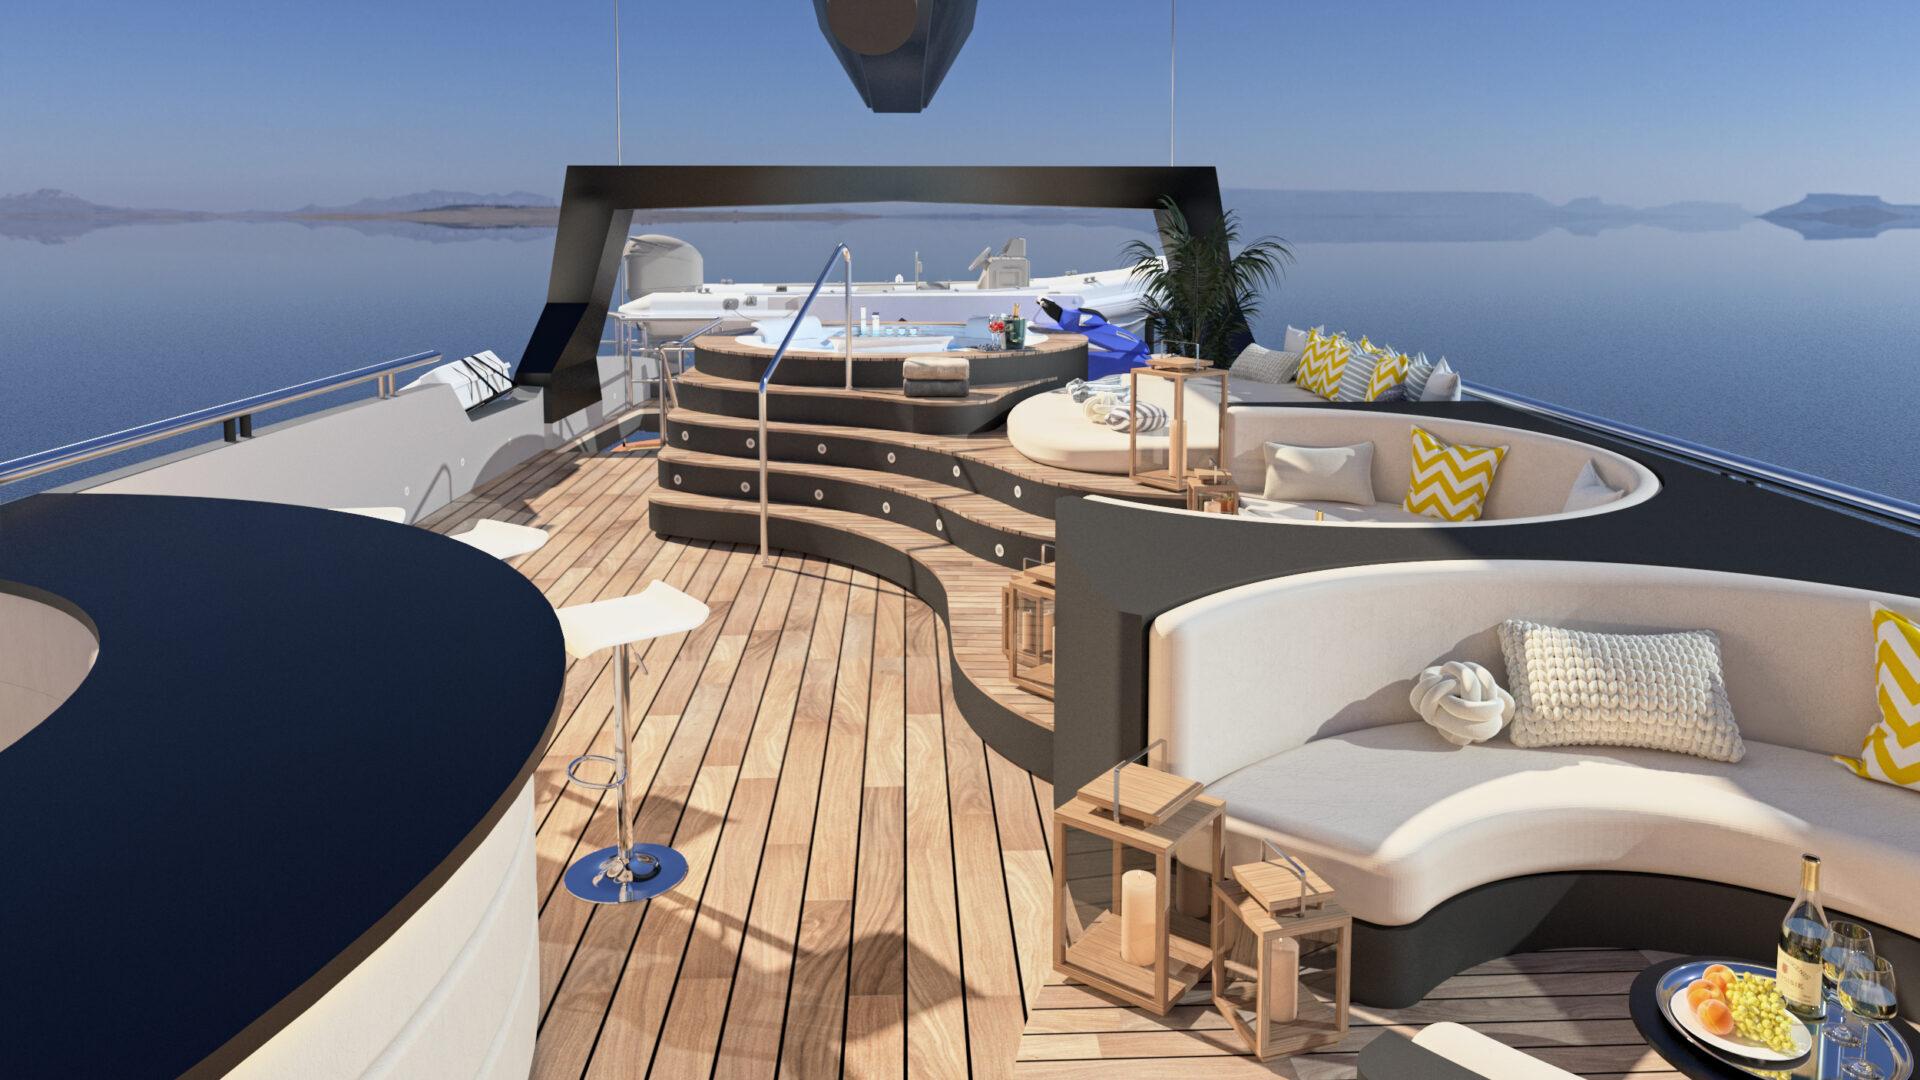 Luxury Yacht Charter UK - High Point Yachting